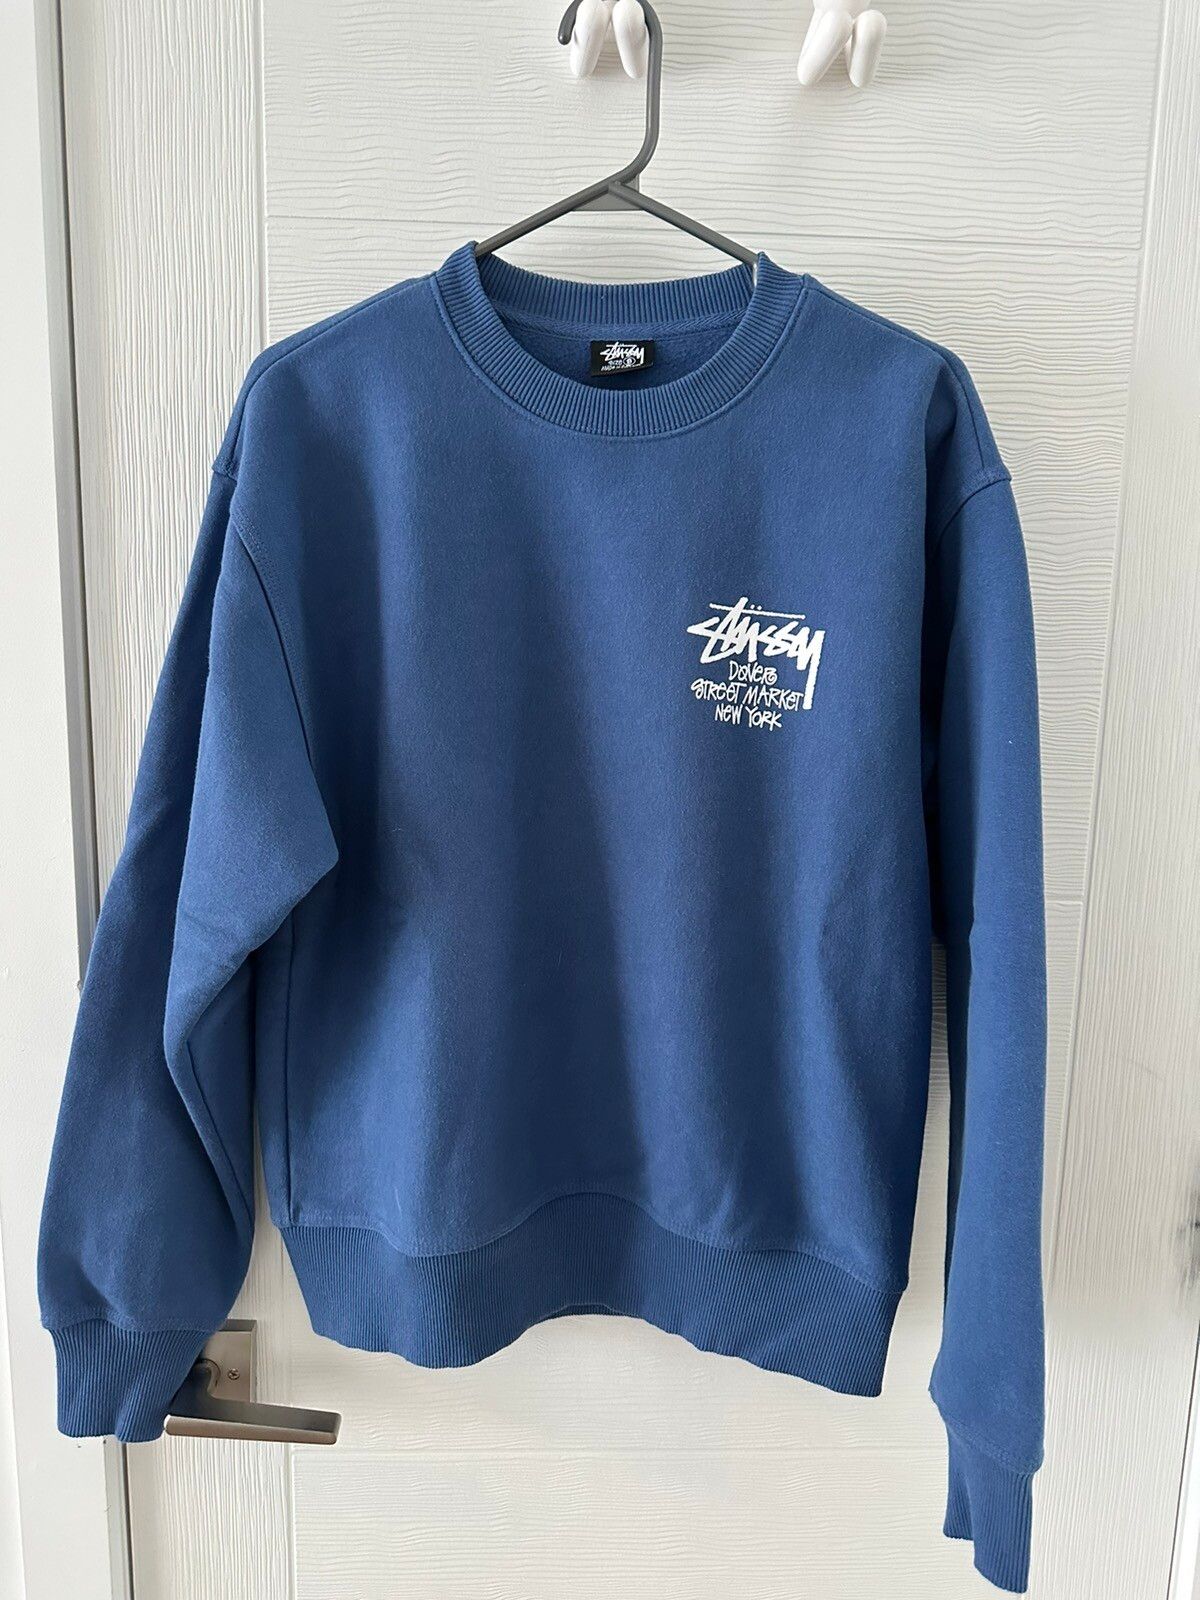 Stussy Stussy Dover Street Market Crewneck sweater blue | Grailed